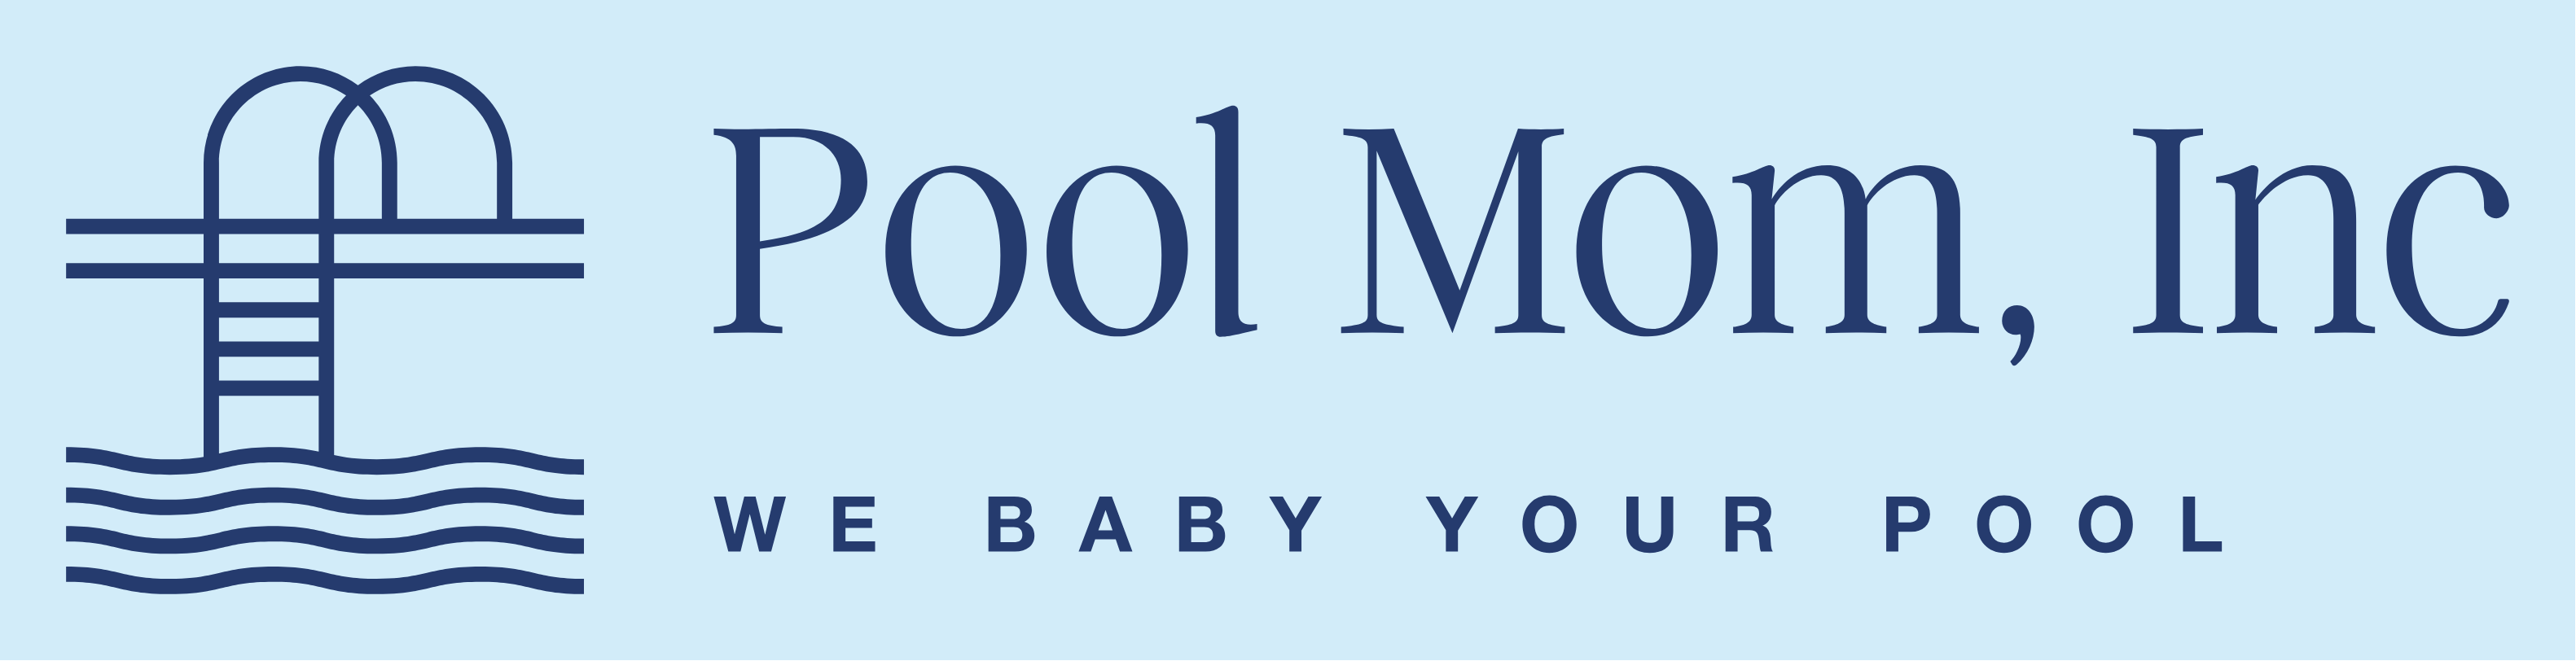 Pool Mom Inc